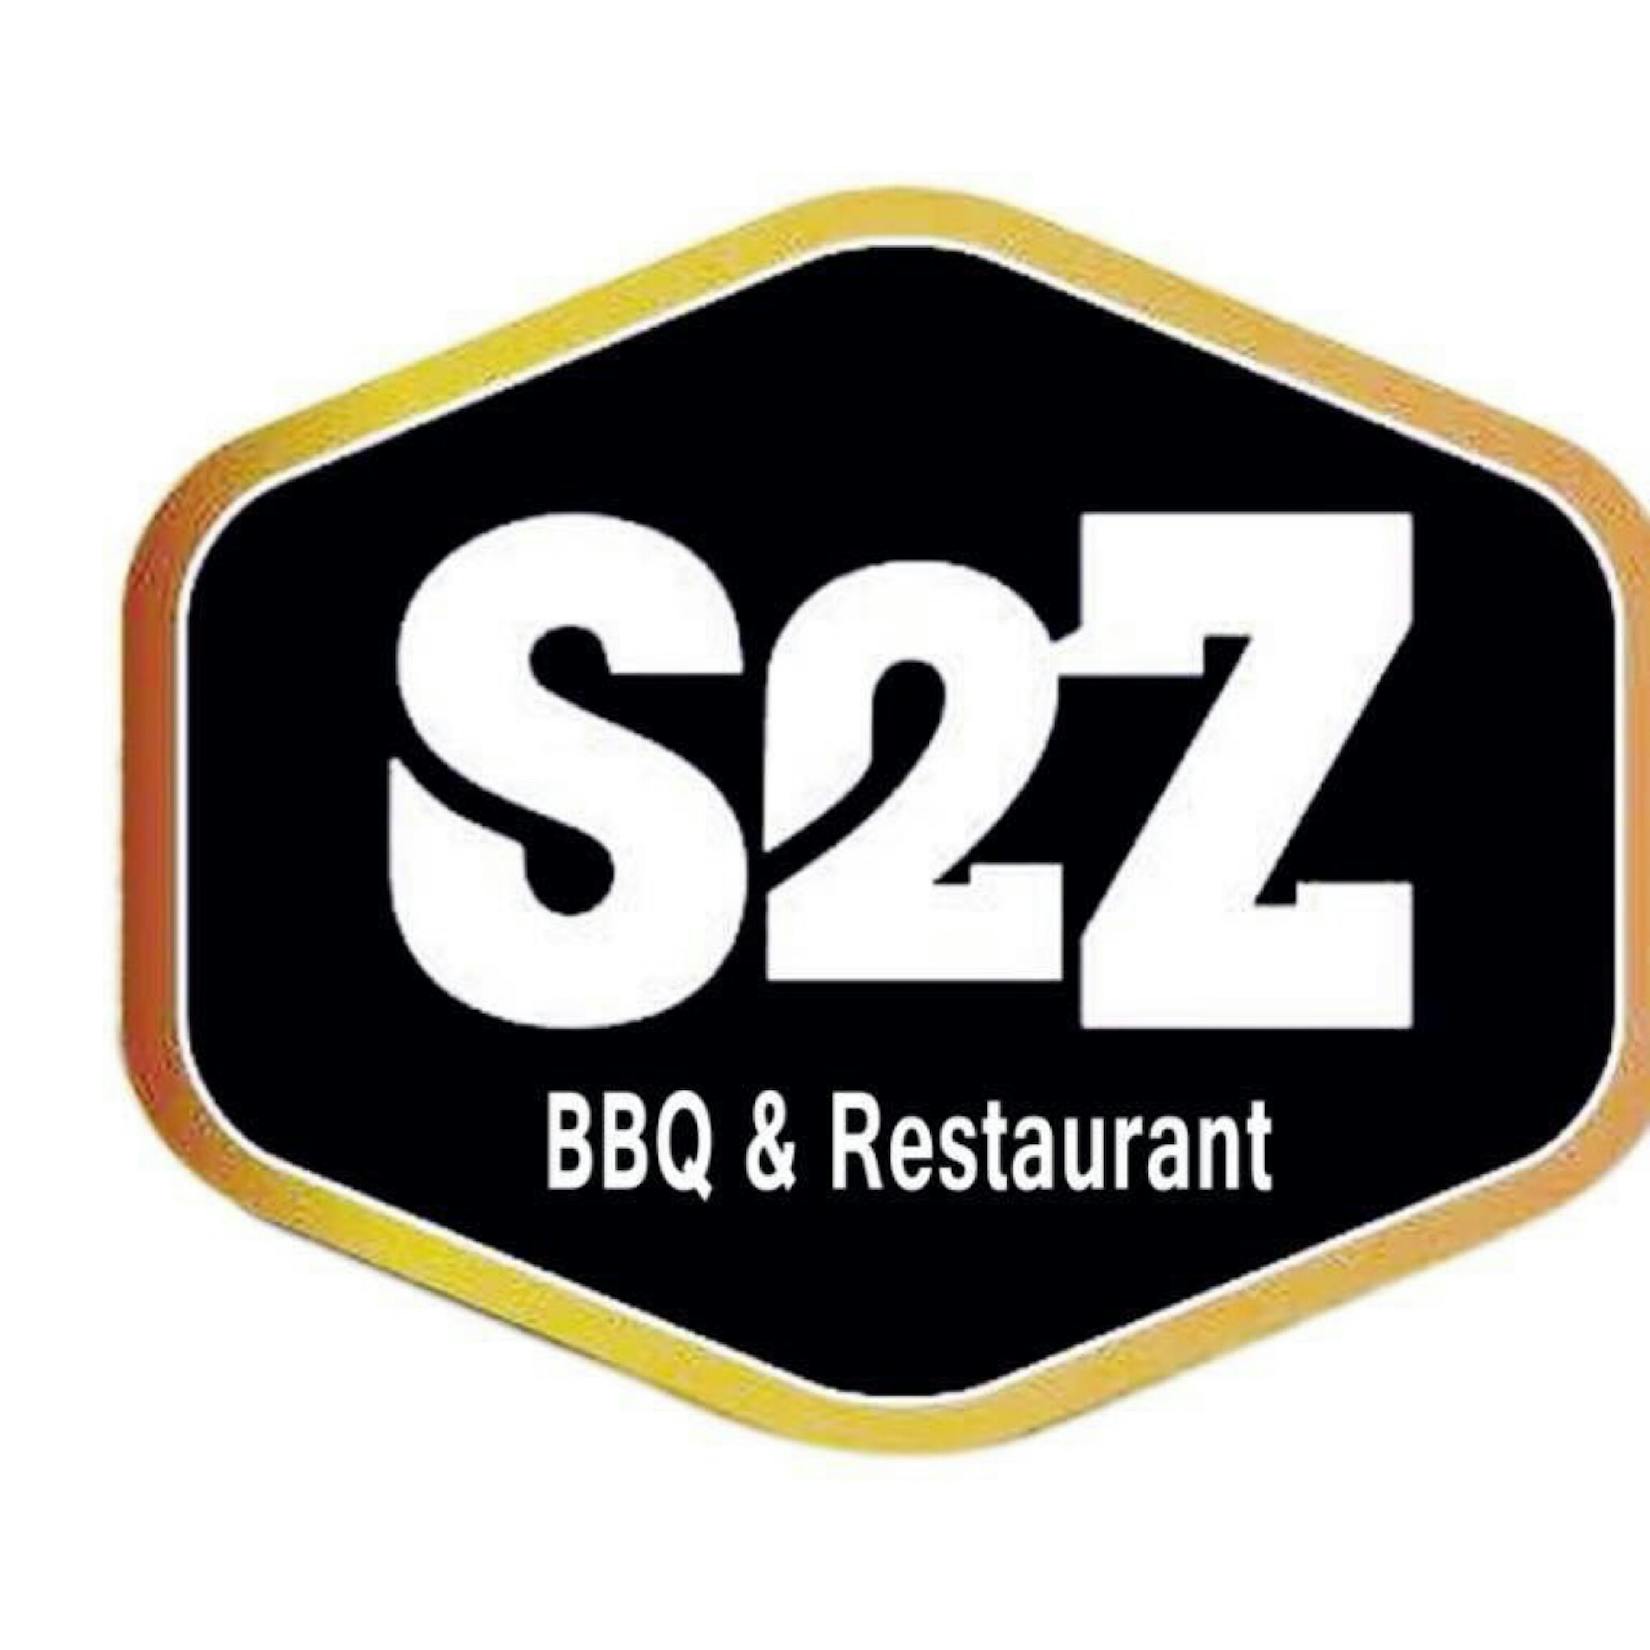 S2Z BBQ & Restaurant | yathar